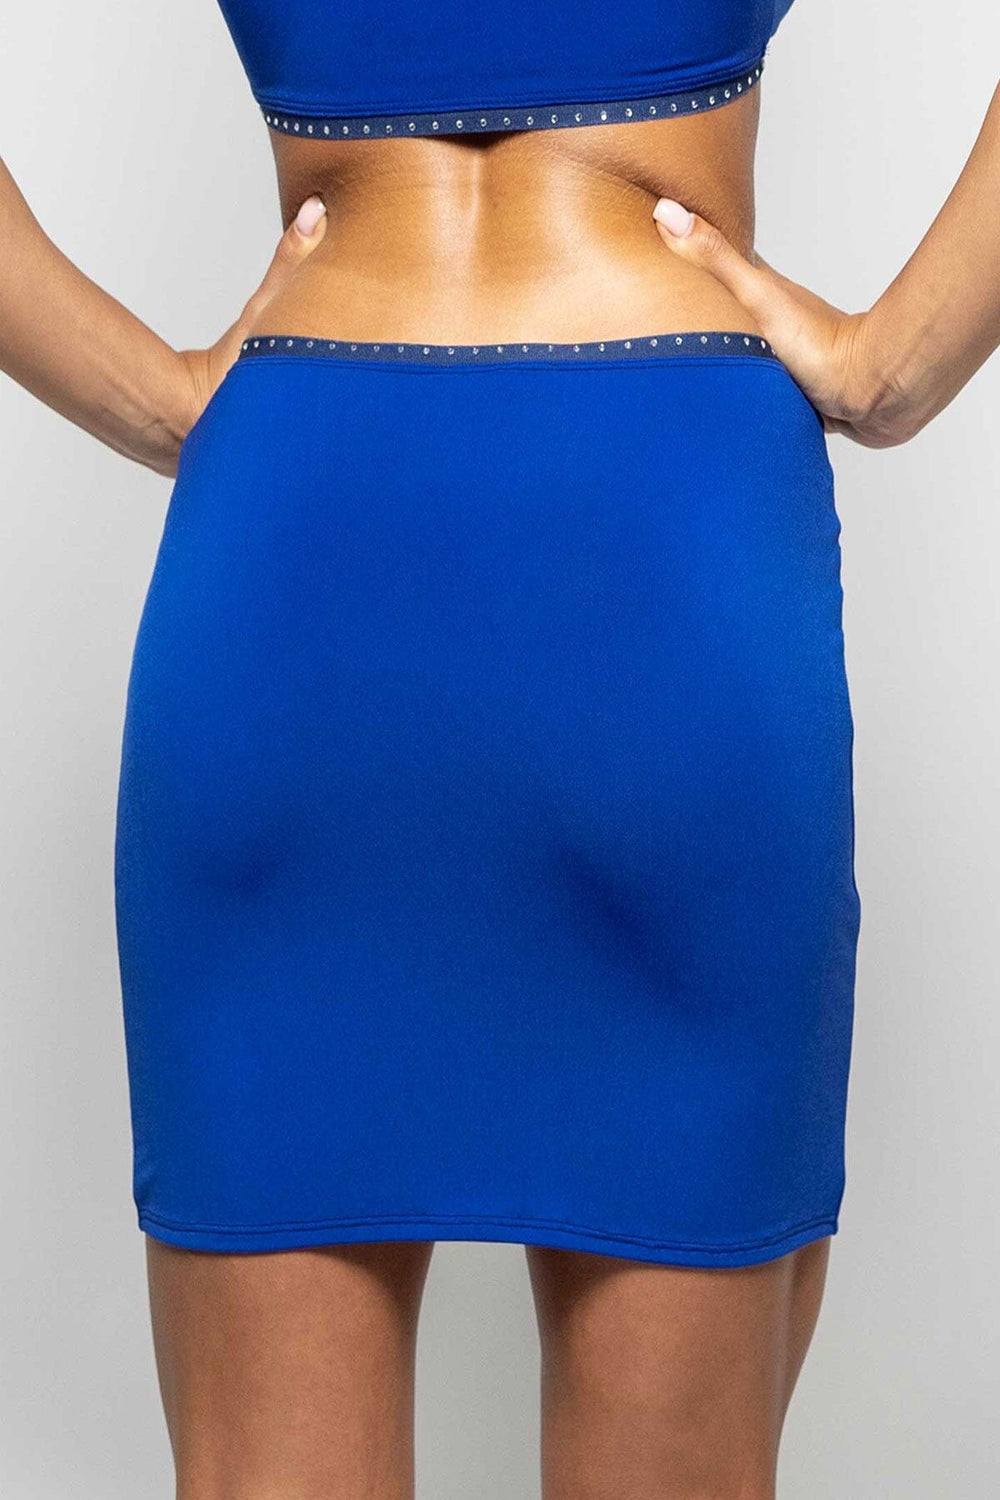 Lila Blue Lycra Skirt-Fetish Skirts-Les P'tites Folies-SEXYSHOES.COM